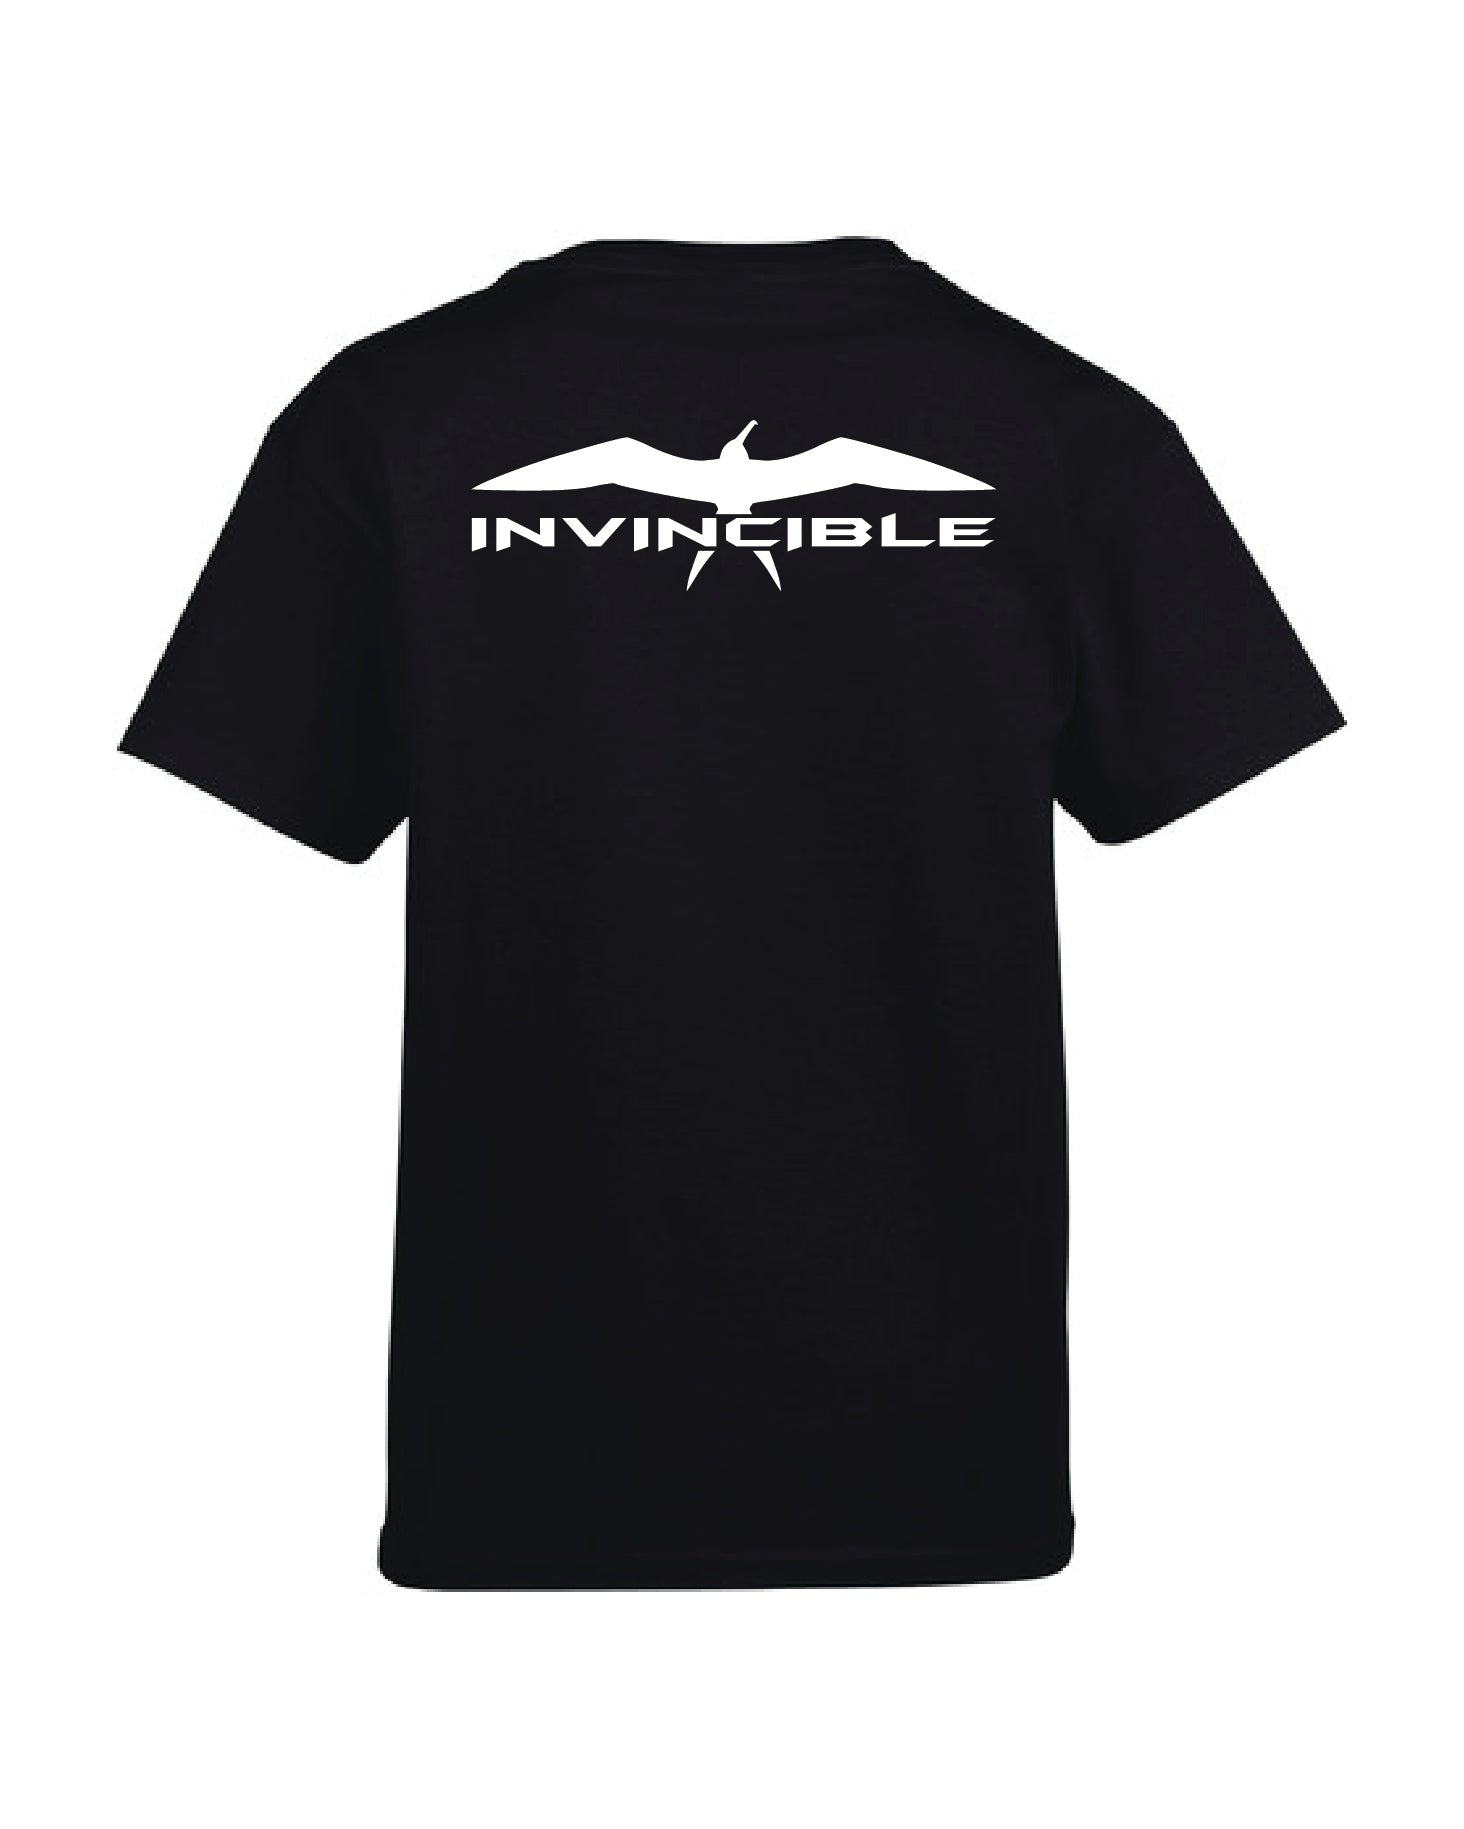 Invincible Signature Youth Black Short Sleeve Shirt